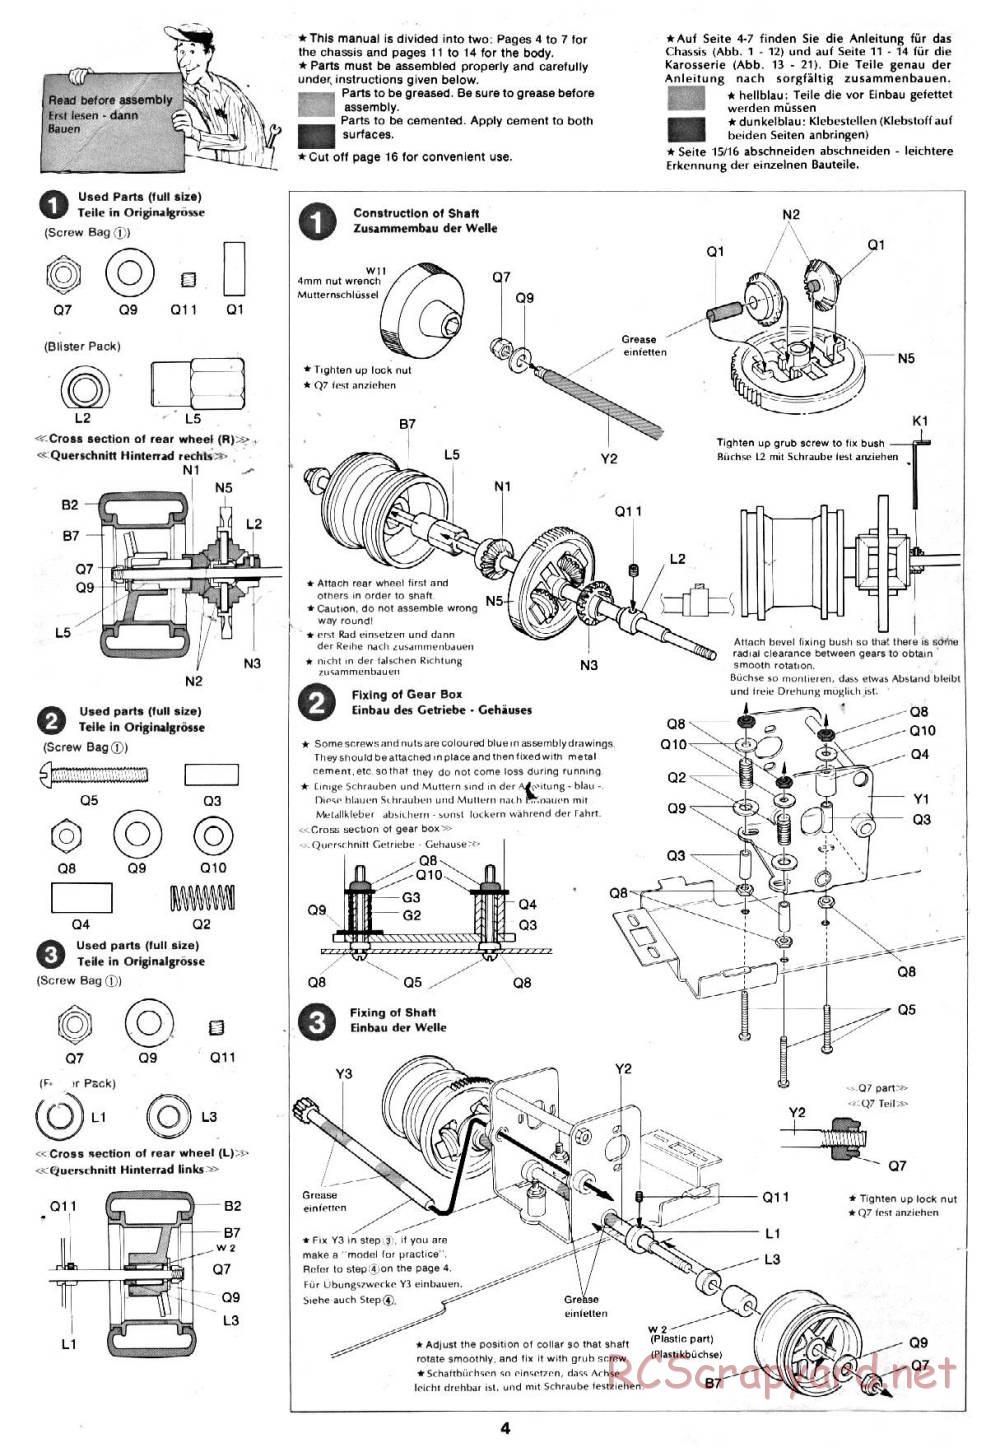 Tamiya - Martini Porsche 935 Turbo - 58002 - Manual - Page 4